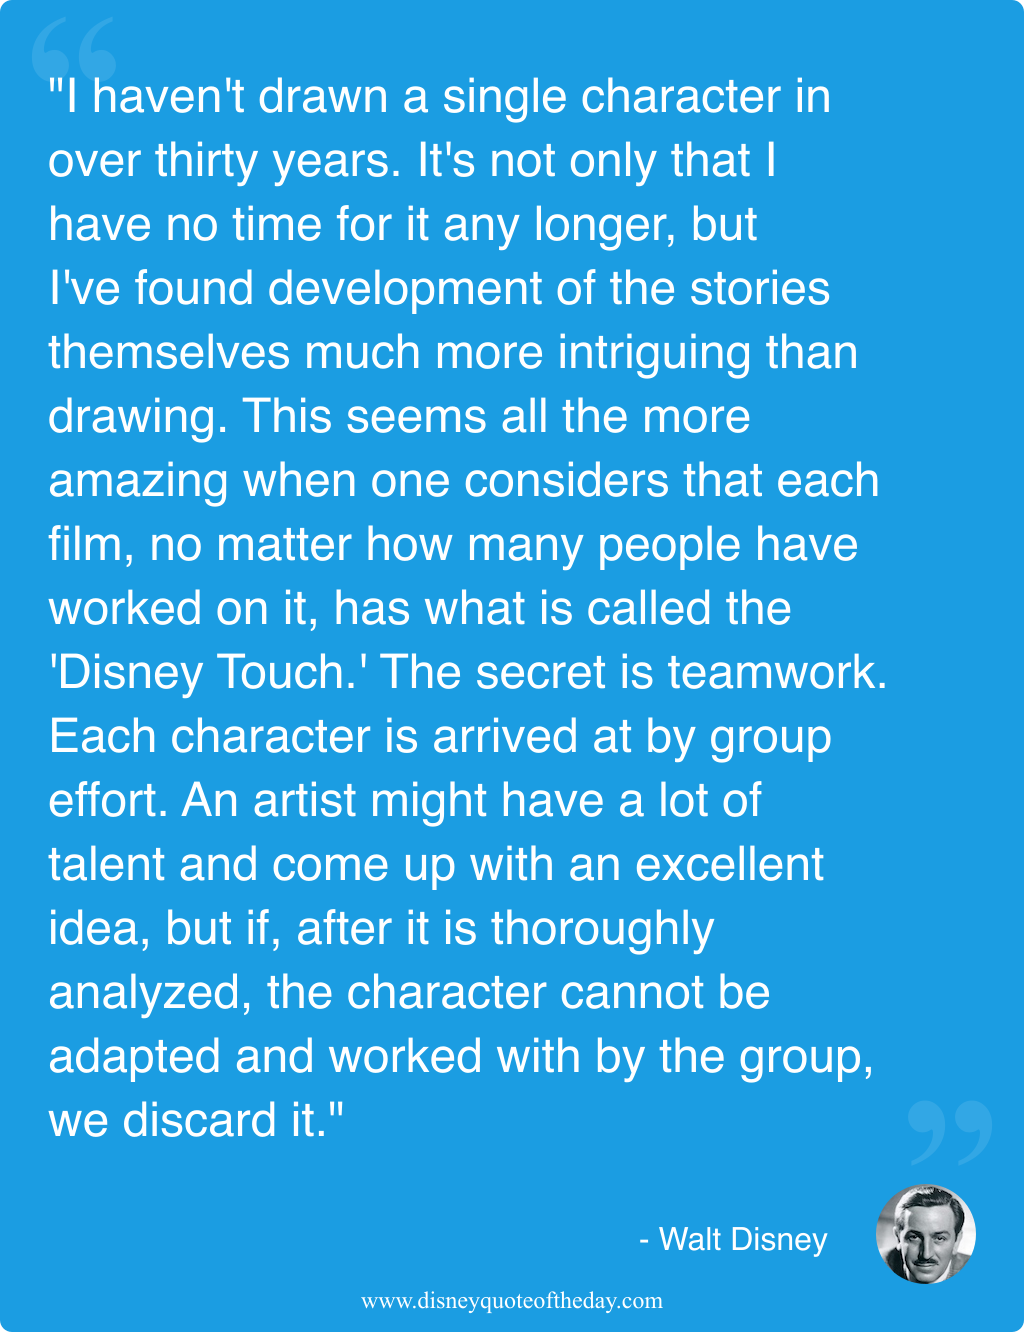 Quote by Walt Disney, "I haven't drawn a single..."